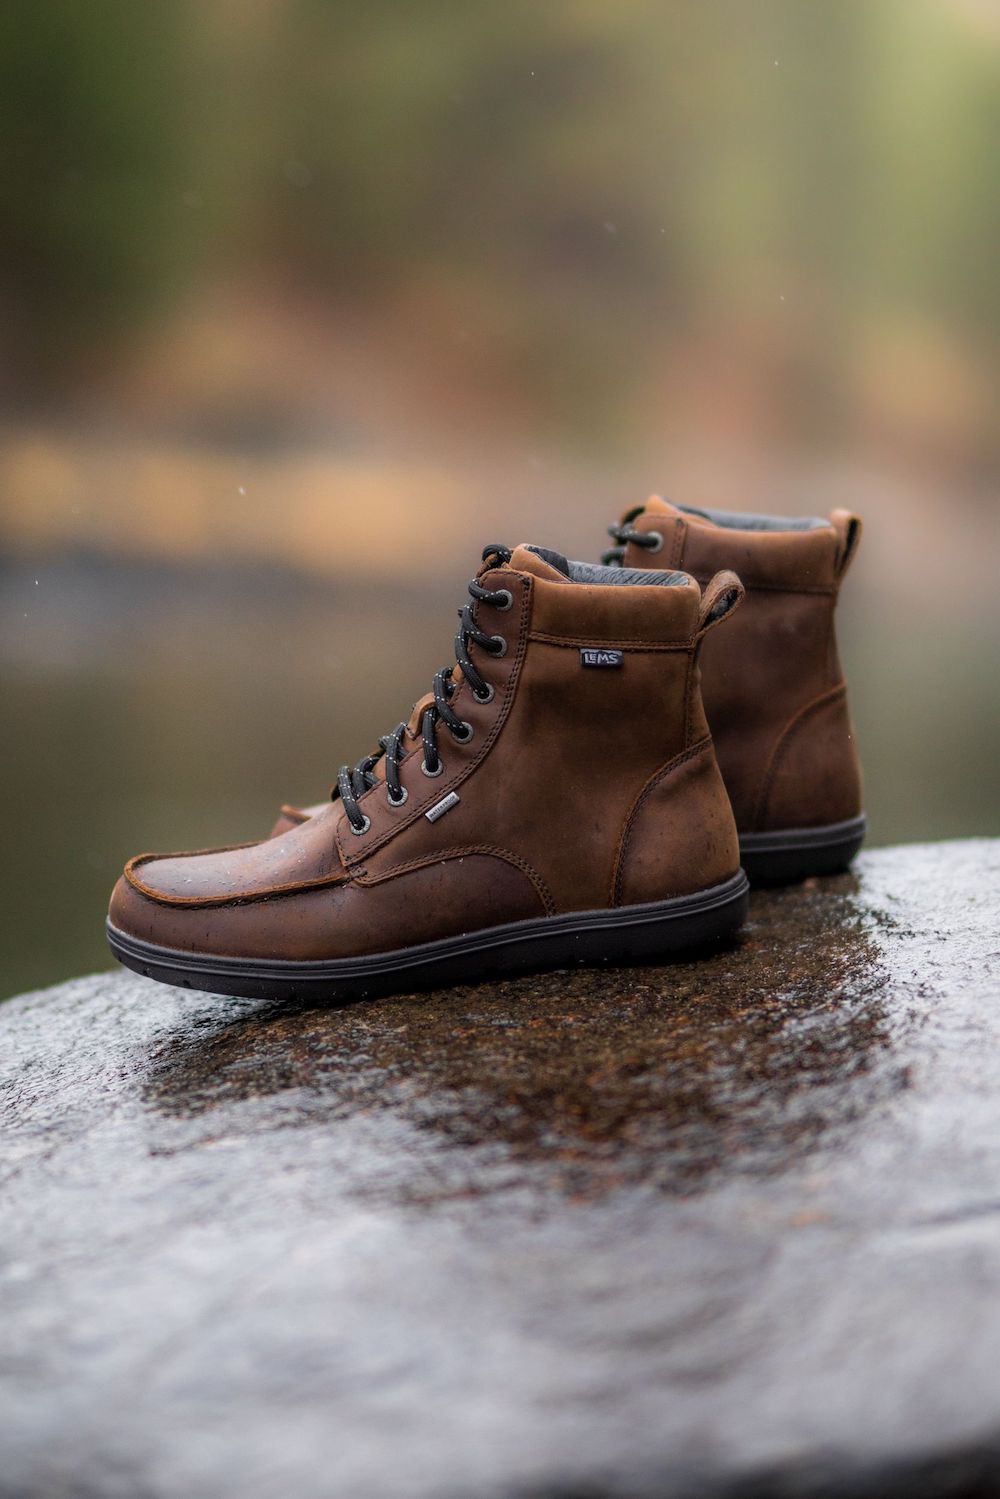 Lems Waterproof Boulder Boots | The 